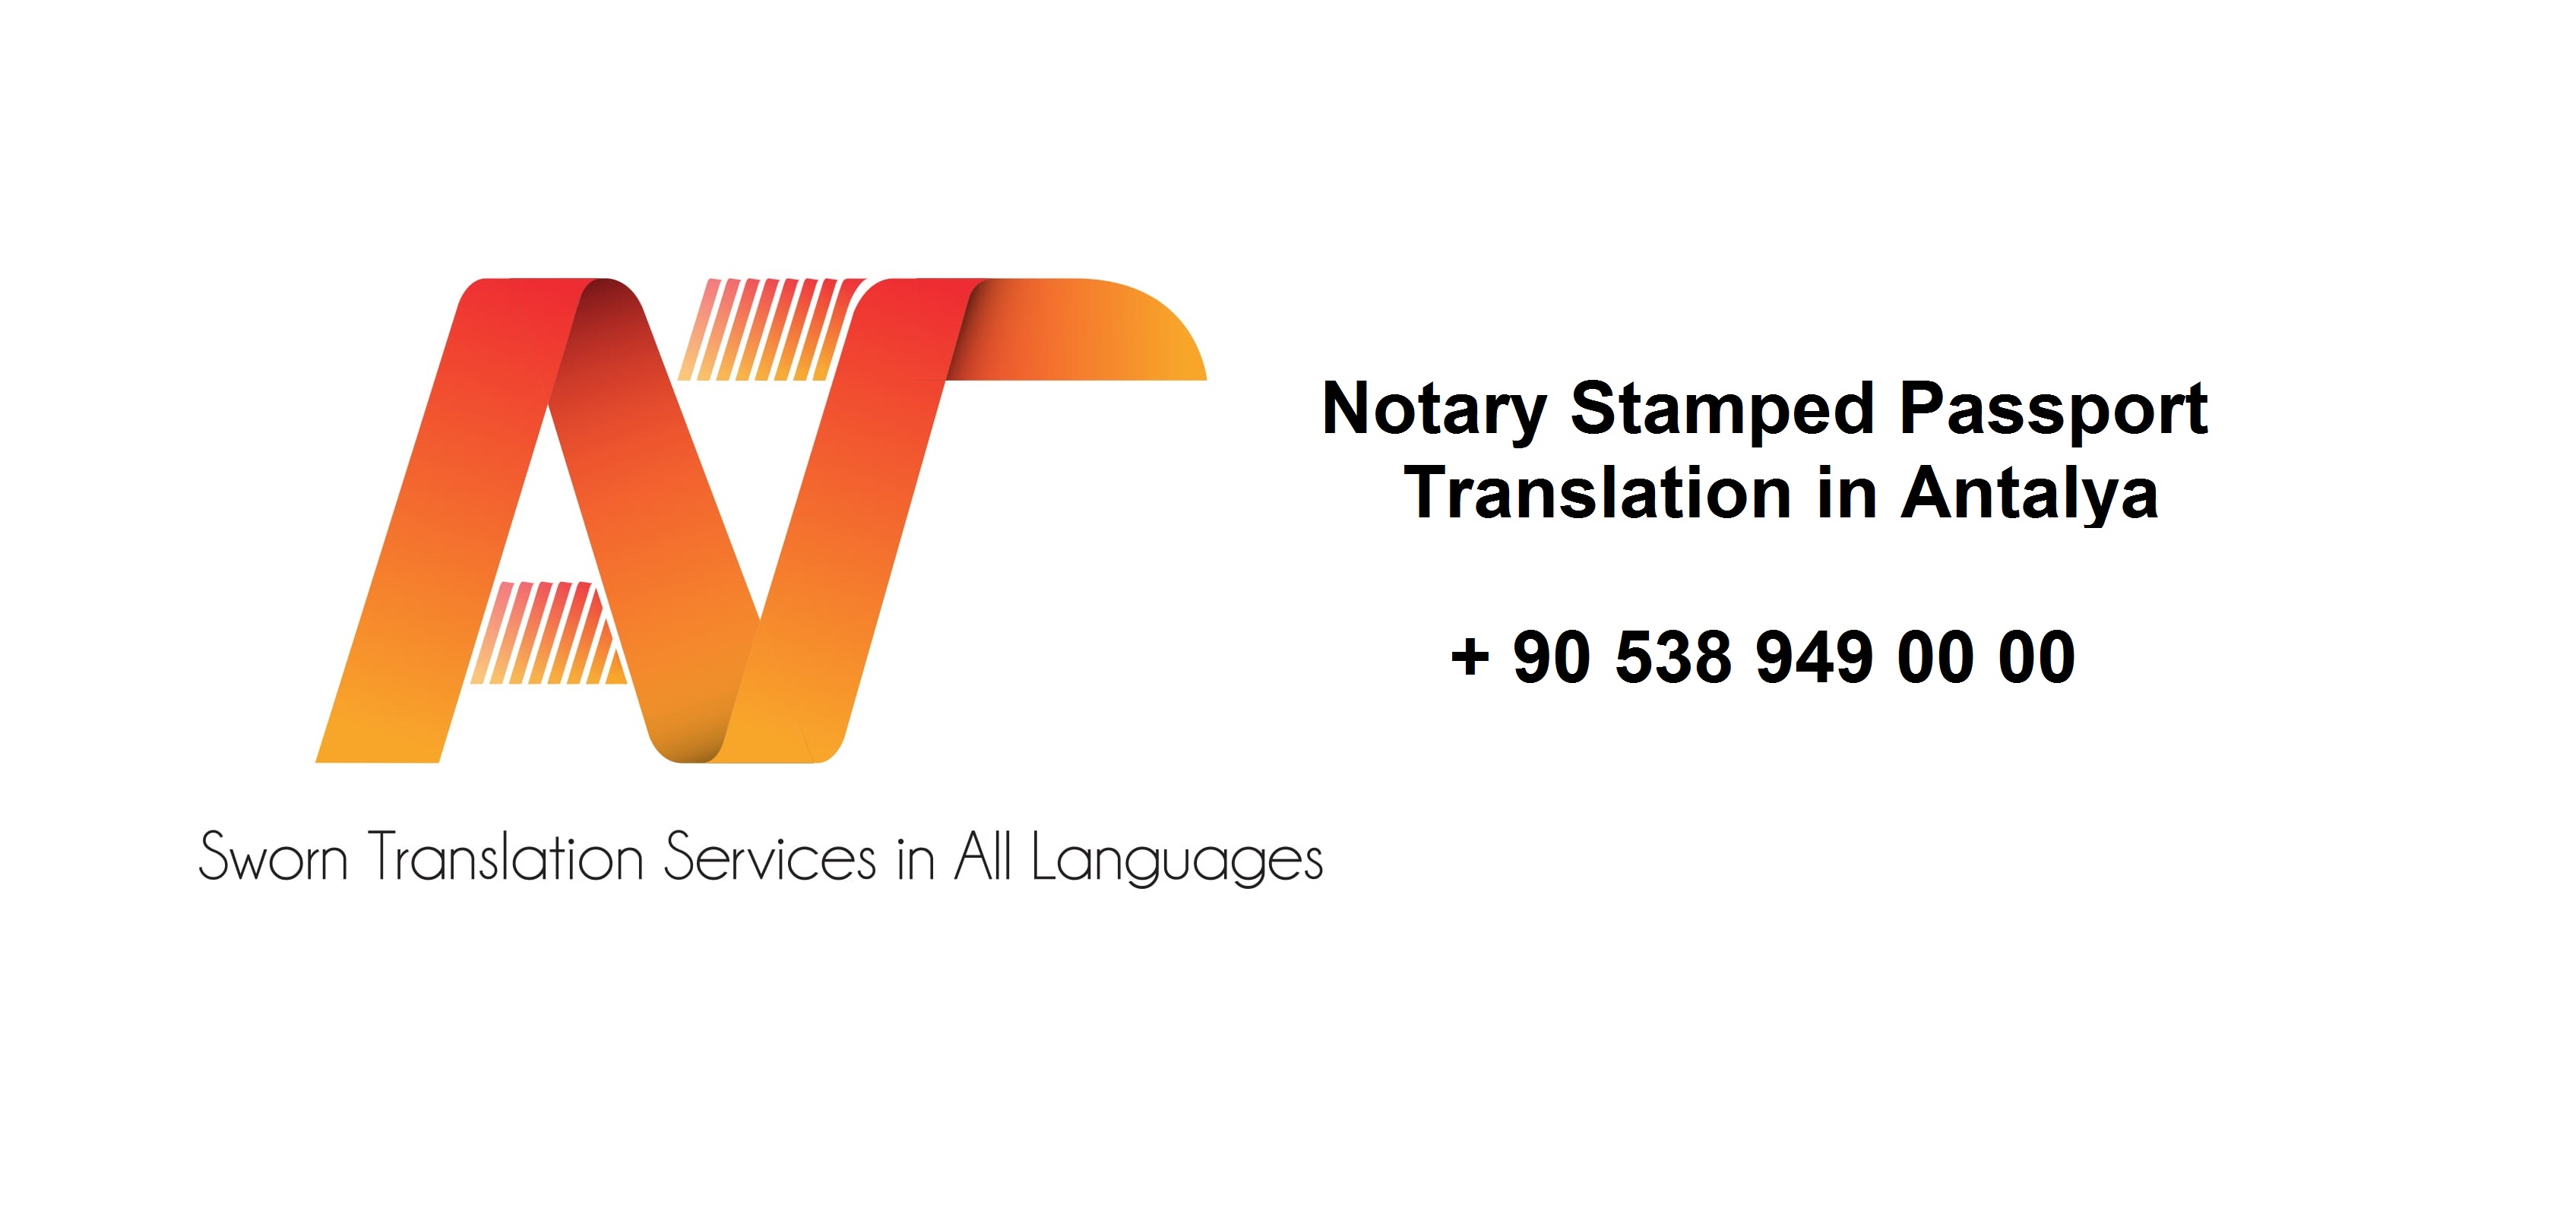 Notary Stamped Passport Translation in Antalya